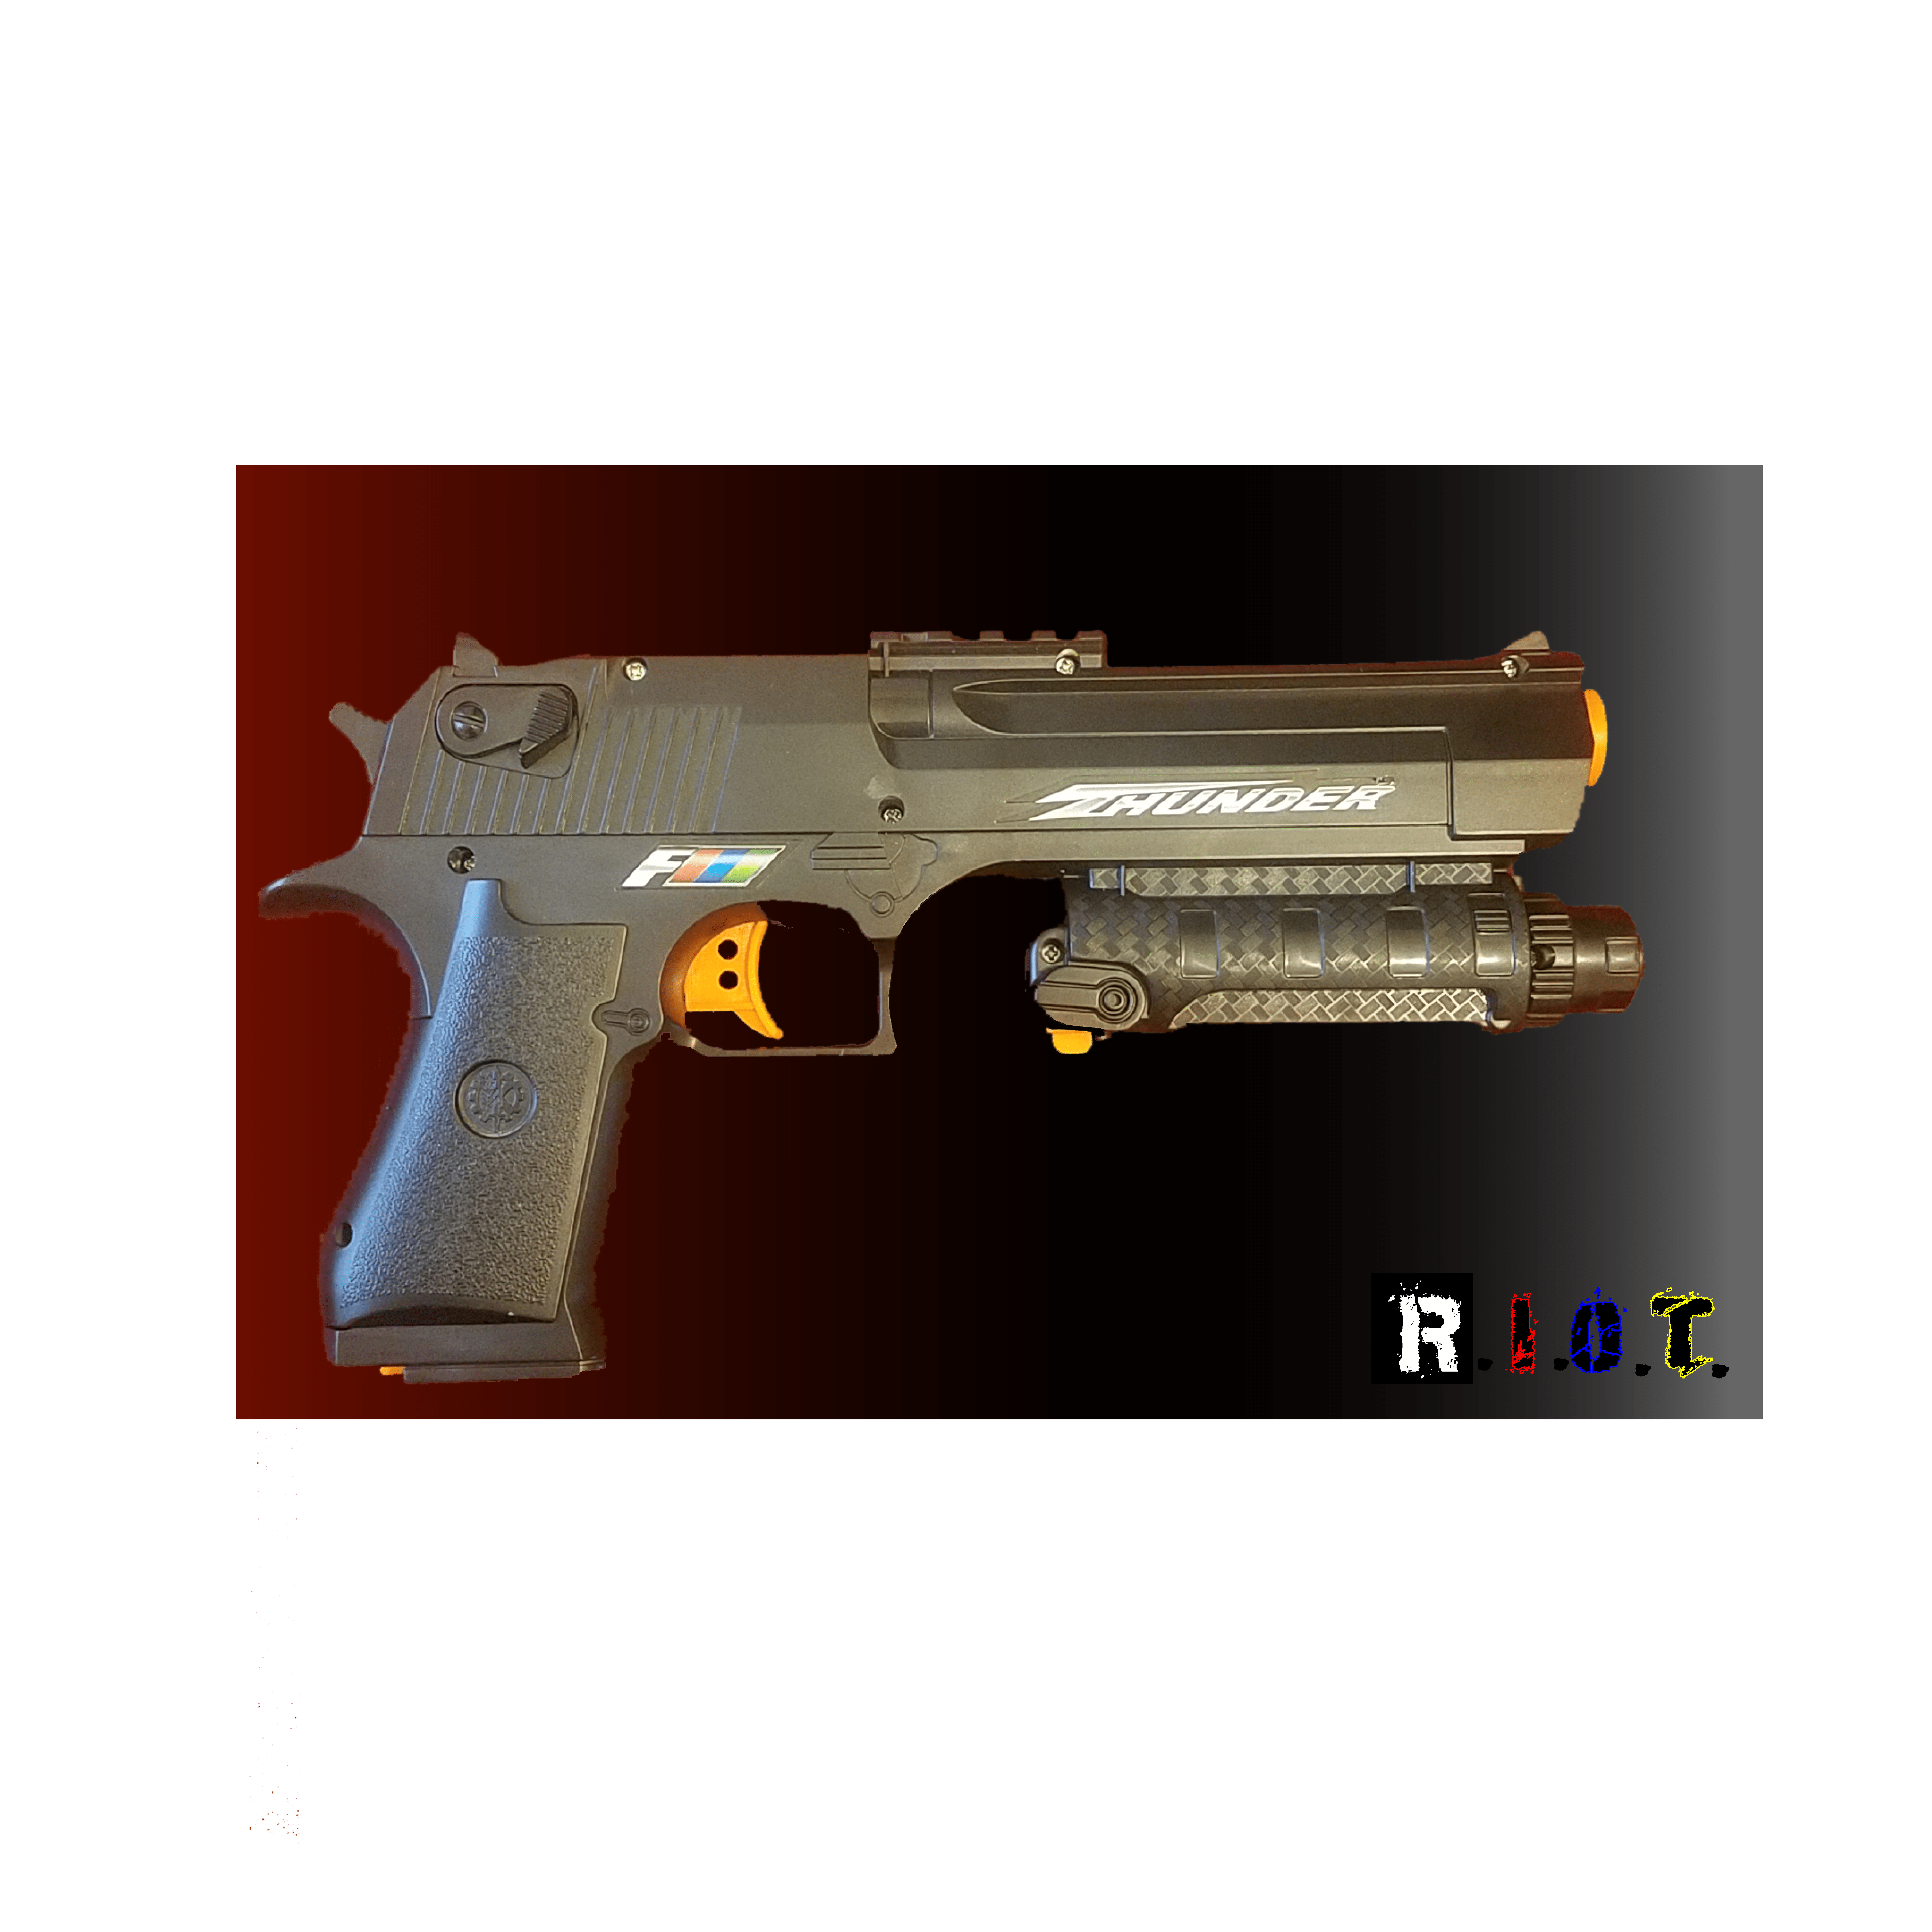 pistol clipart toy gun